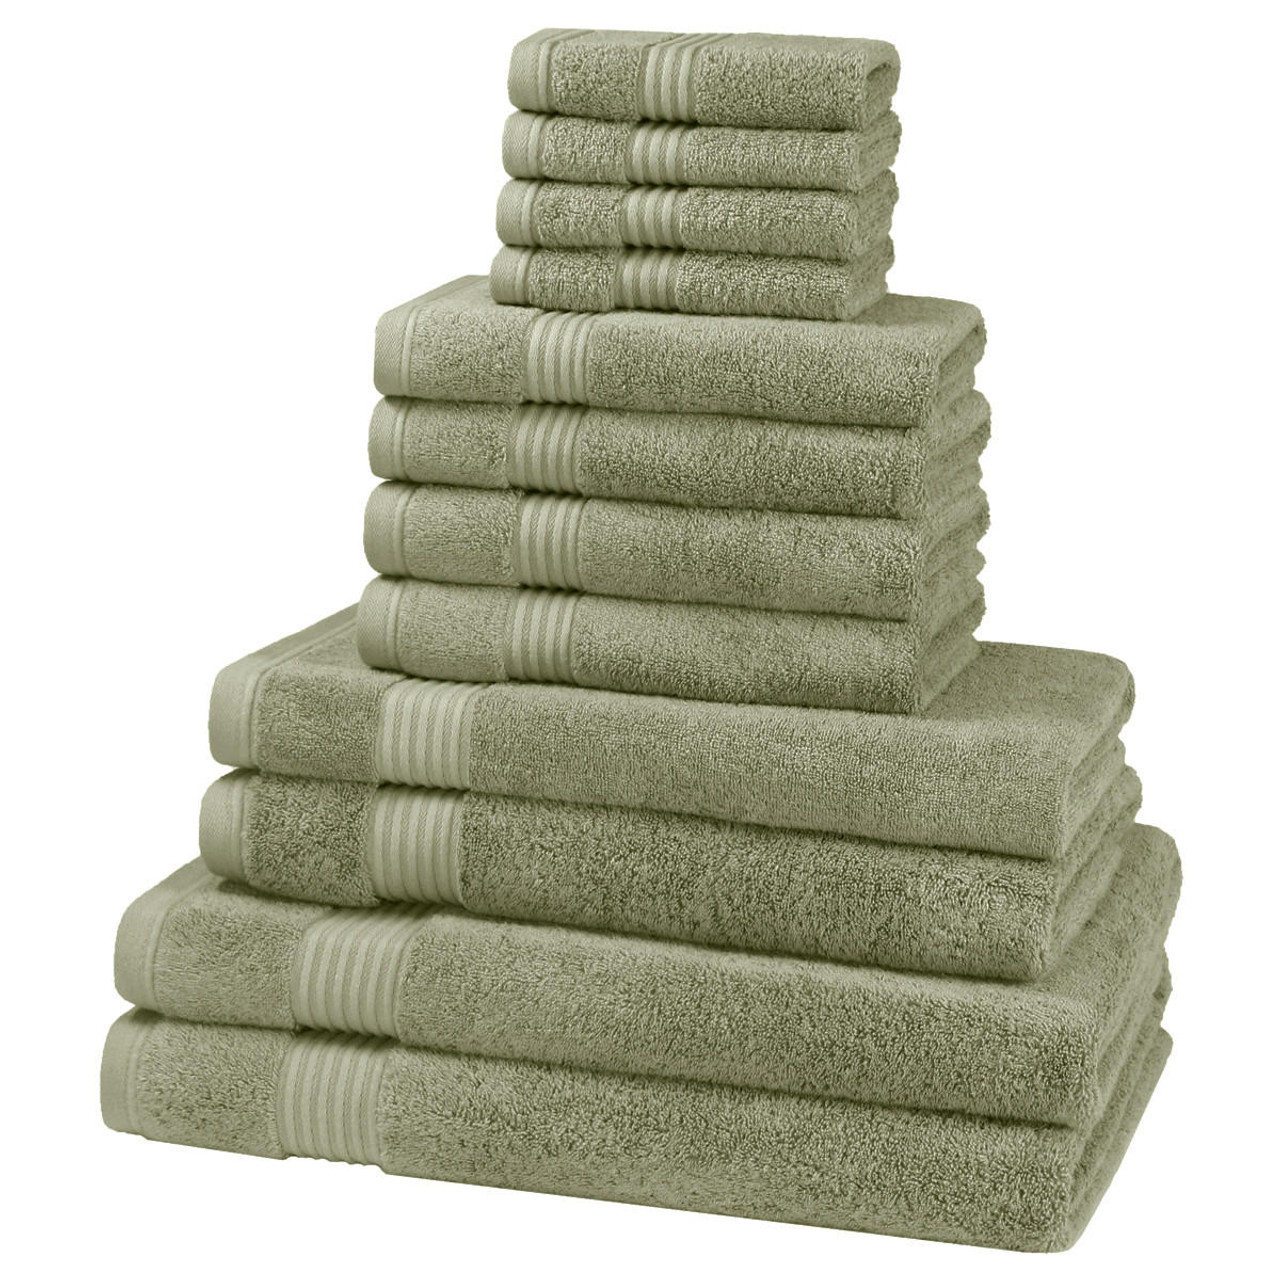 12 Piece 700GSM Bamboo Towel Set - 4 Face Cloths, 4 Hand Towels, 2